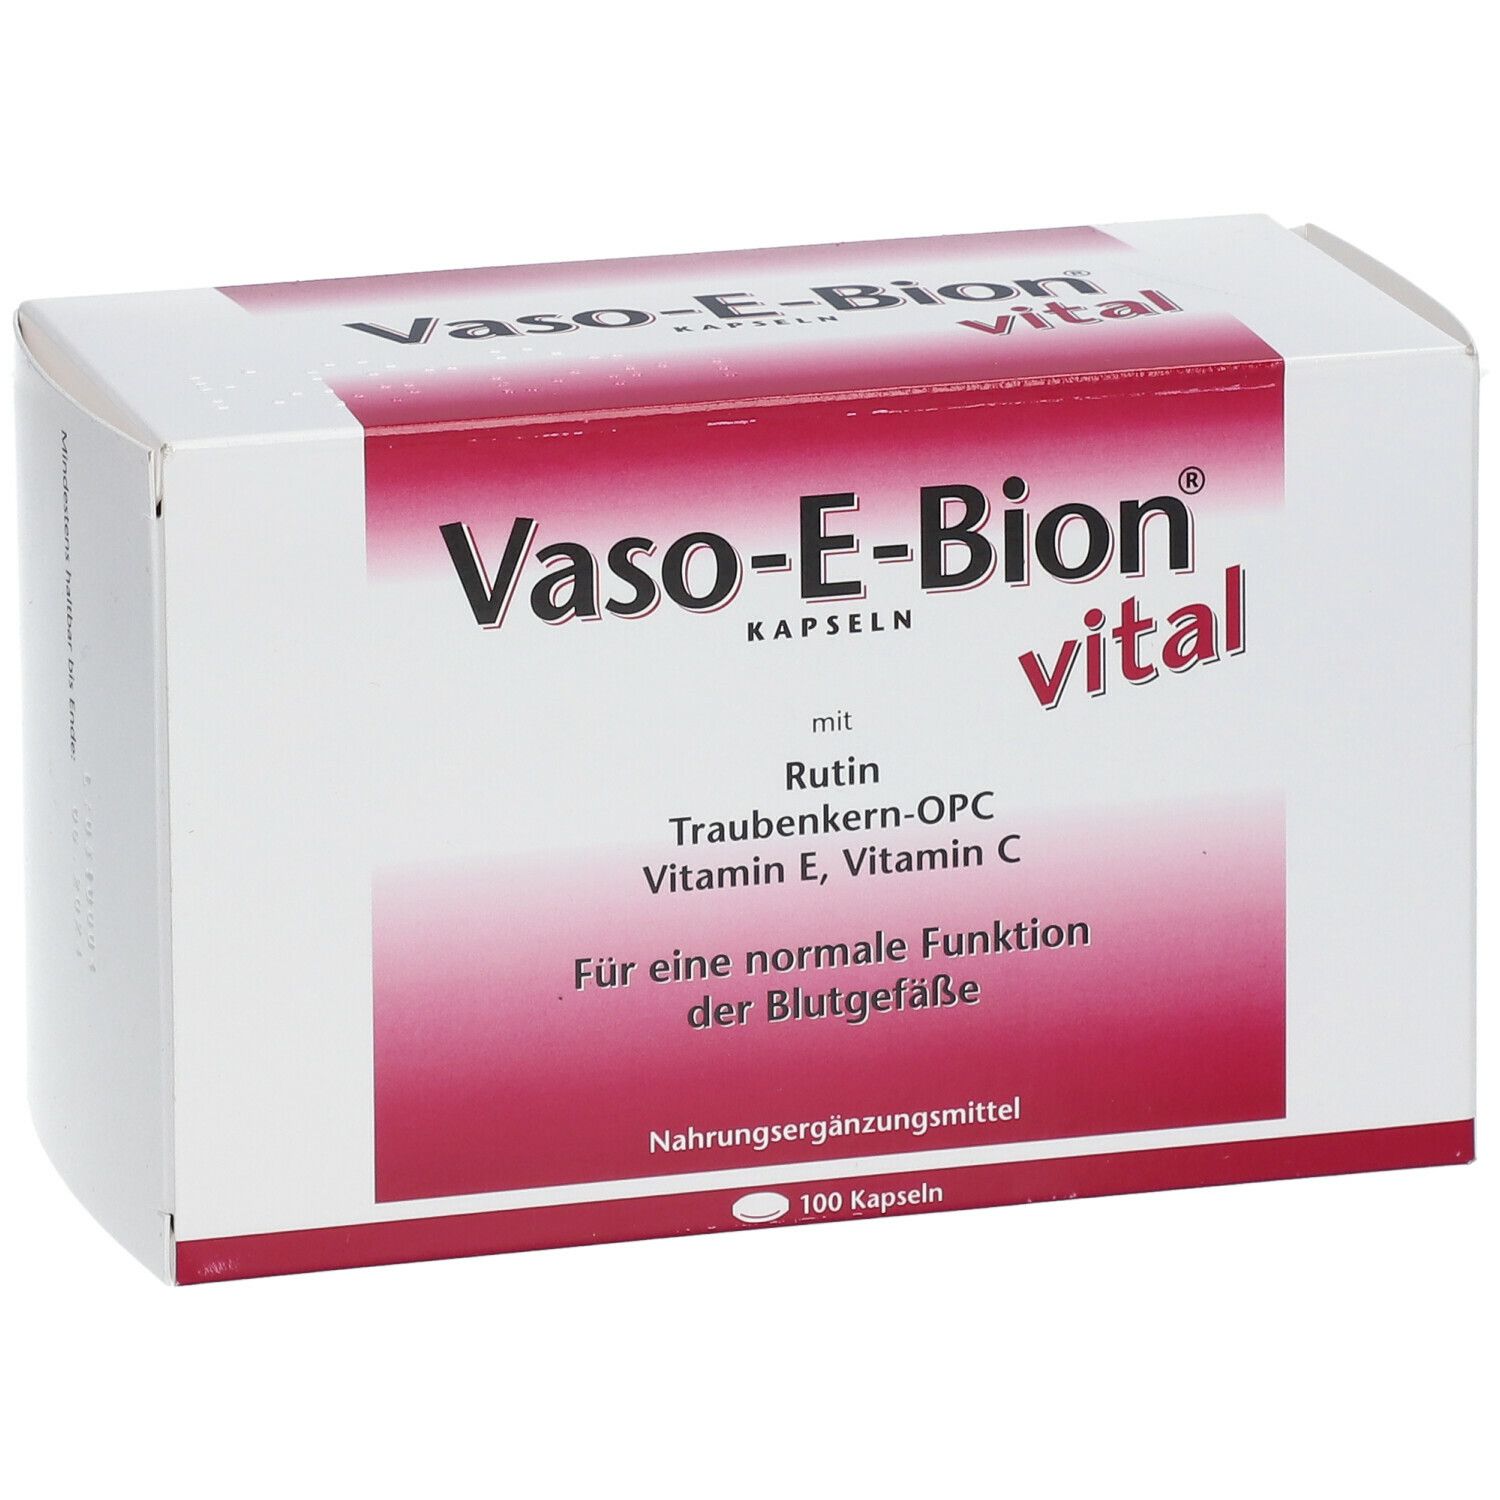 Vaso-E-Bion® vital